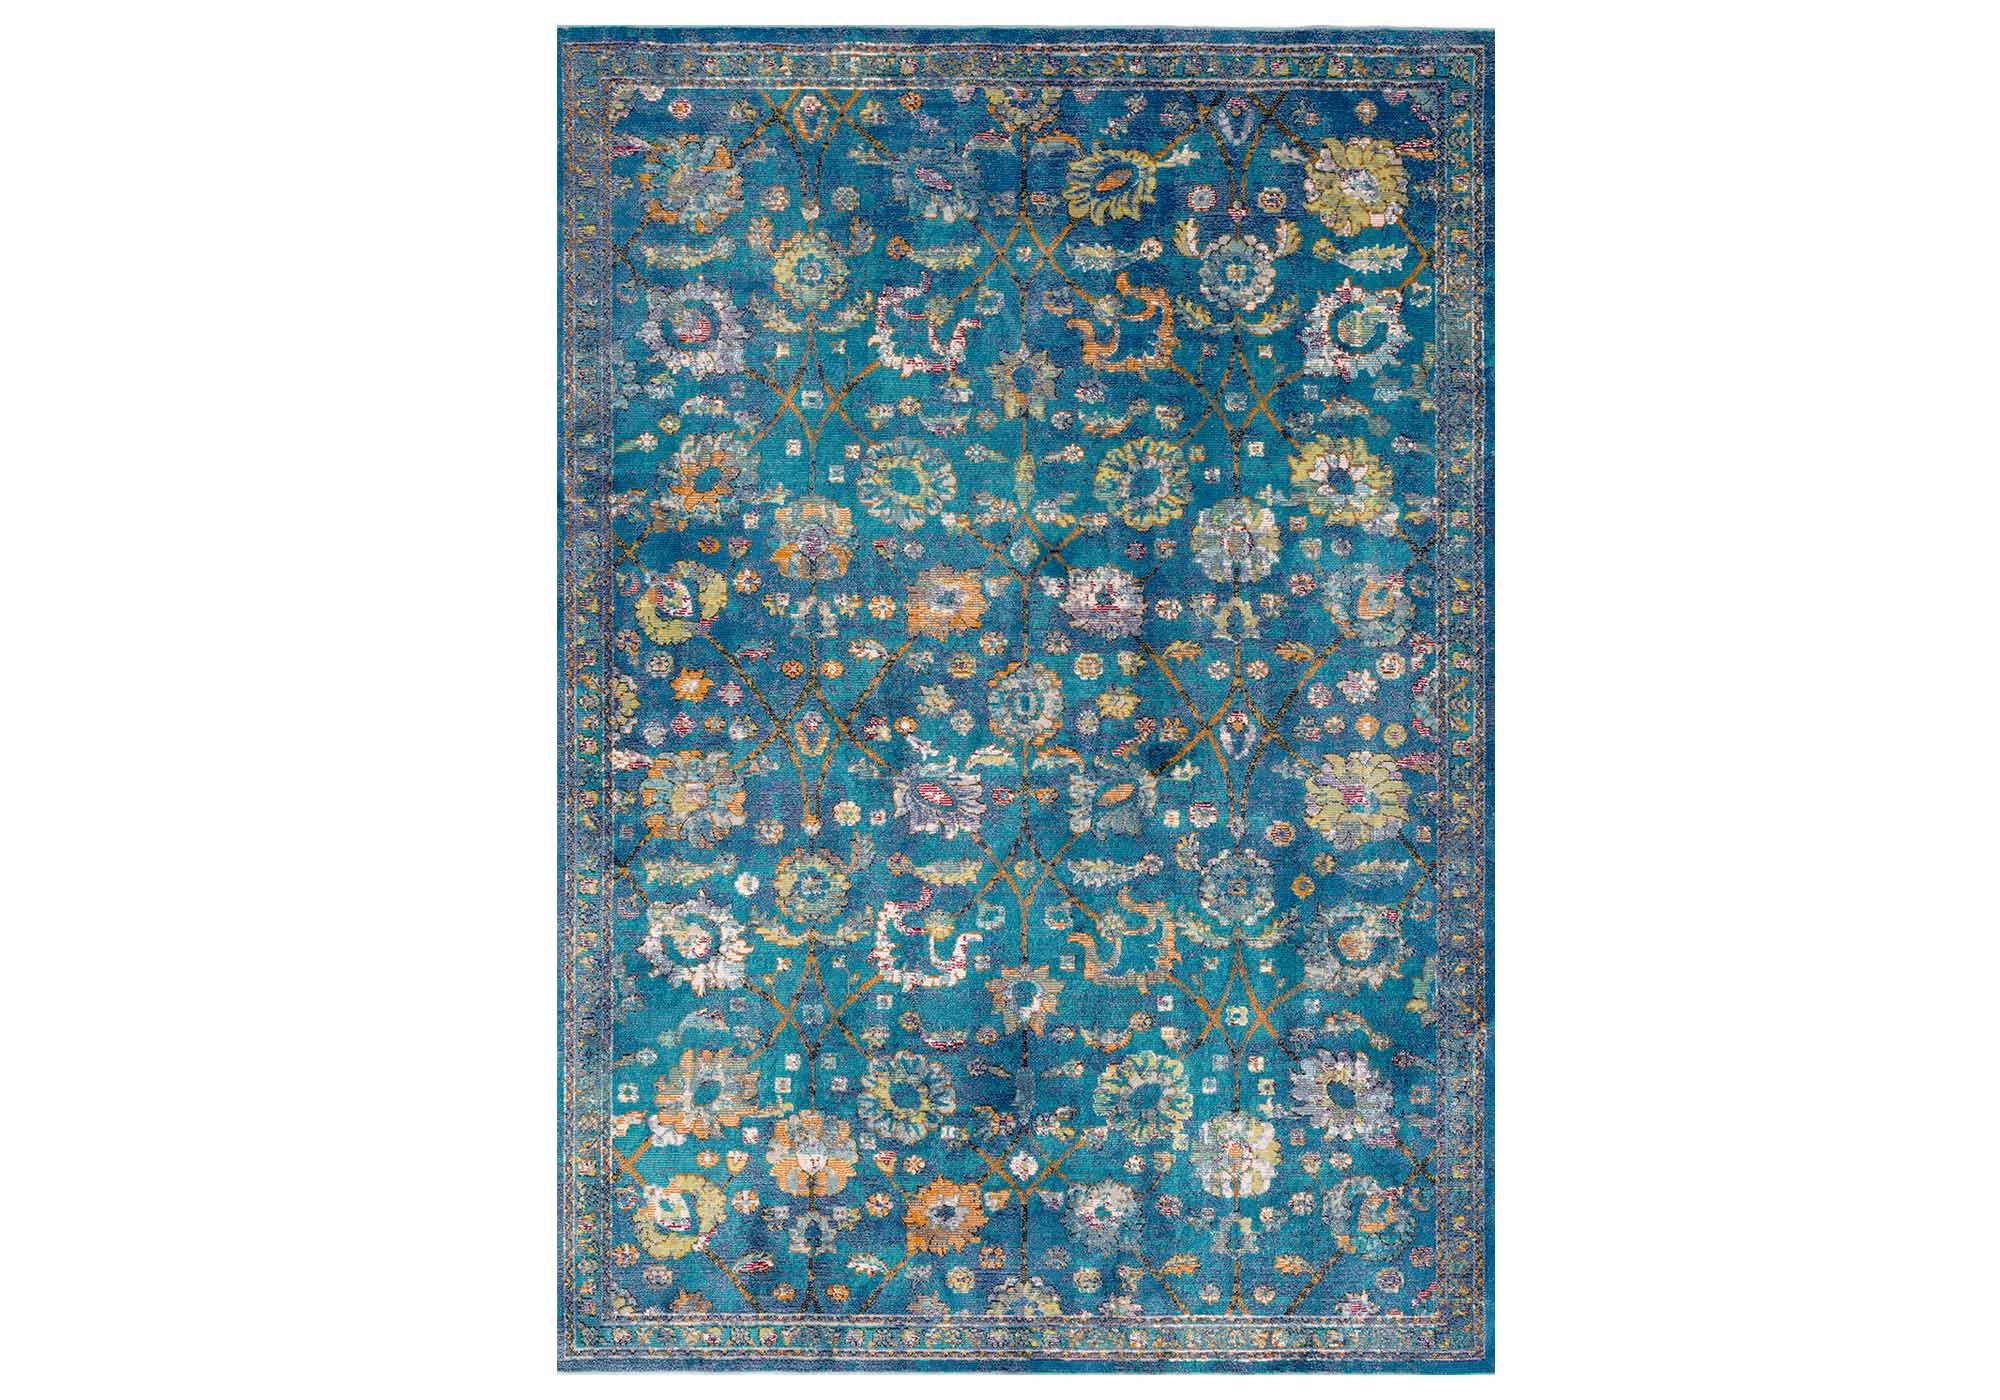 Festival Teppich 200 x 290 cm - mehrfarbig - 6 mm Florhöhe - Picasso 600